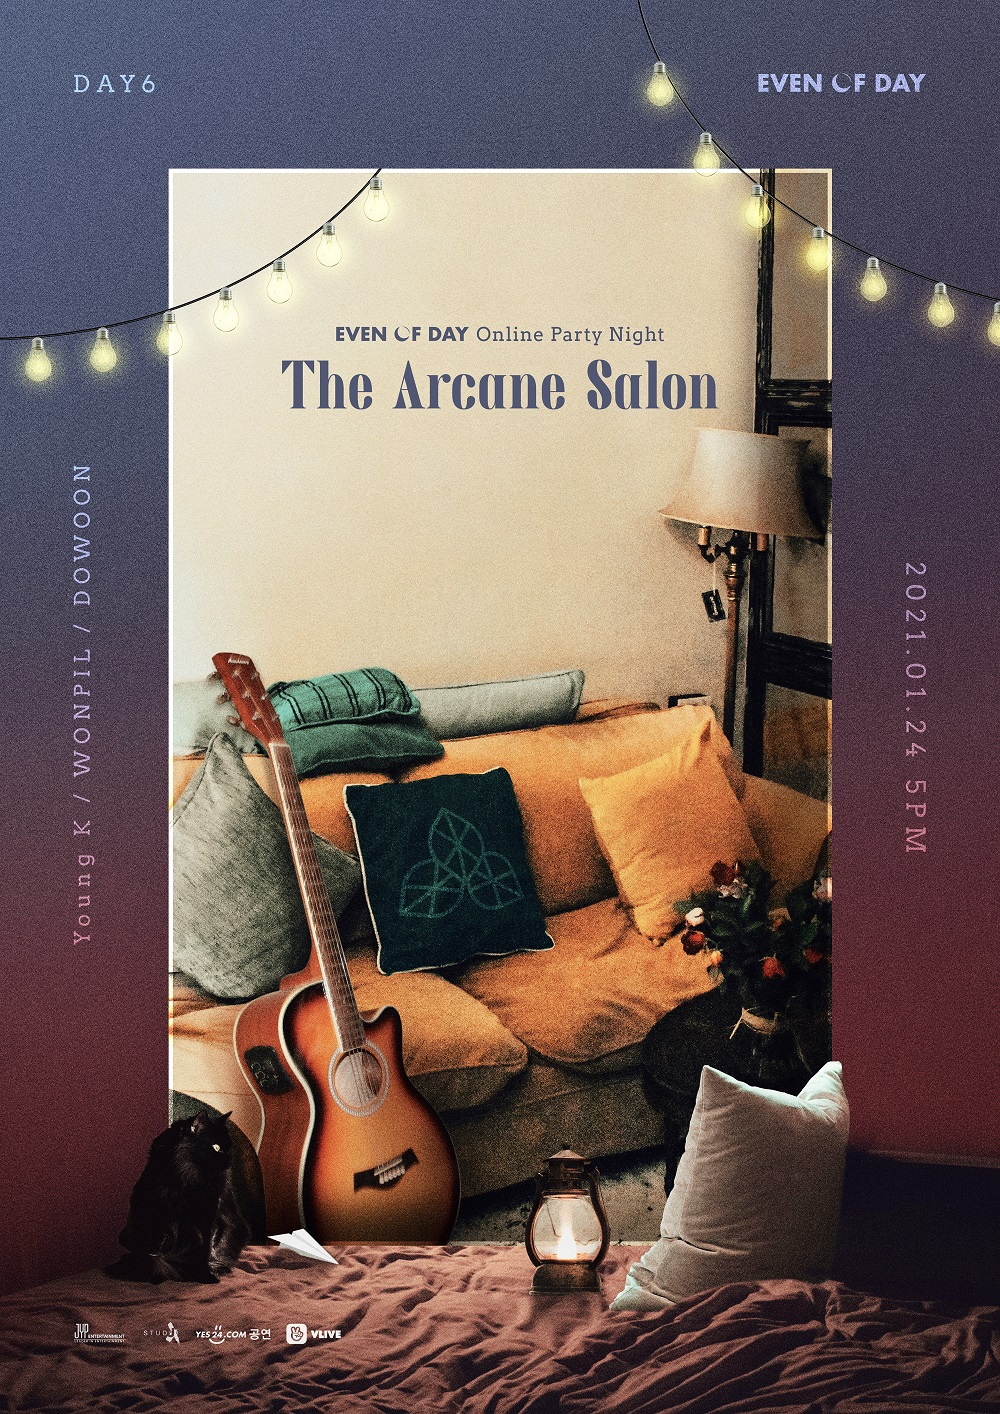 Even of Day (DAY6) объявили новую дату своего онлайн-концерта «The Arcane Salon»